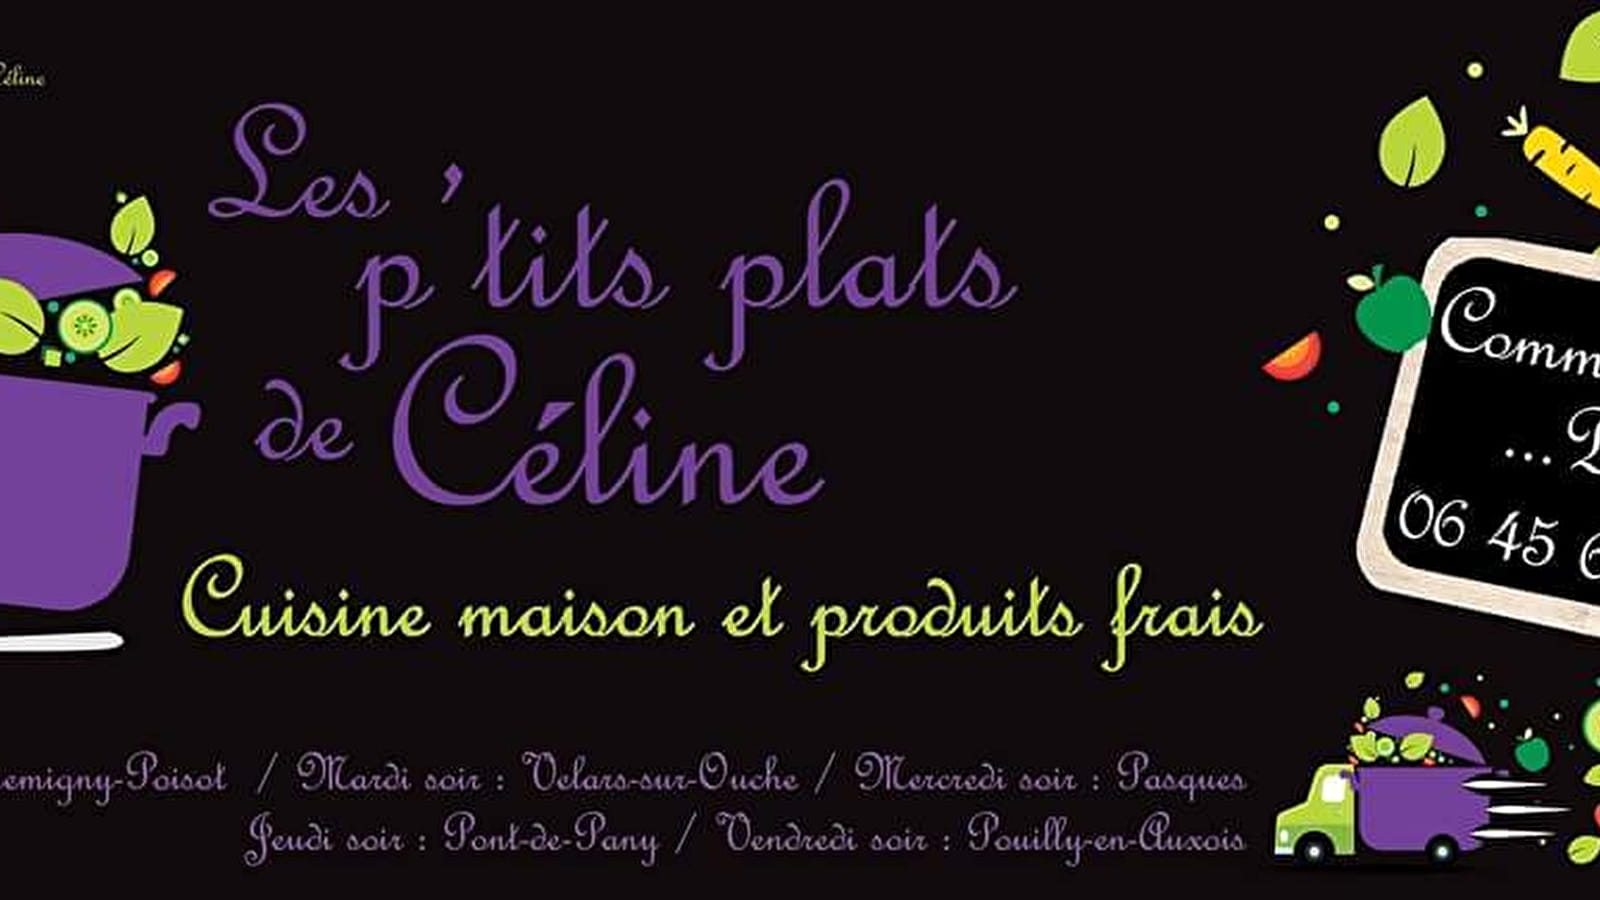 Les p’tits plats de Céline